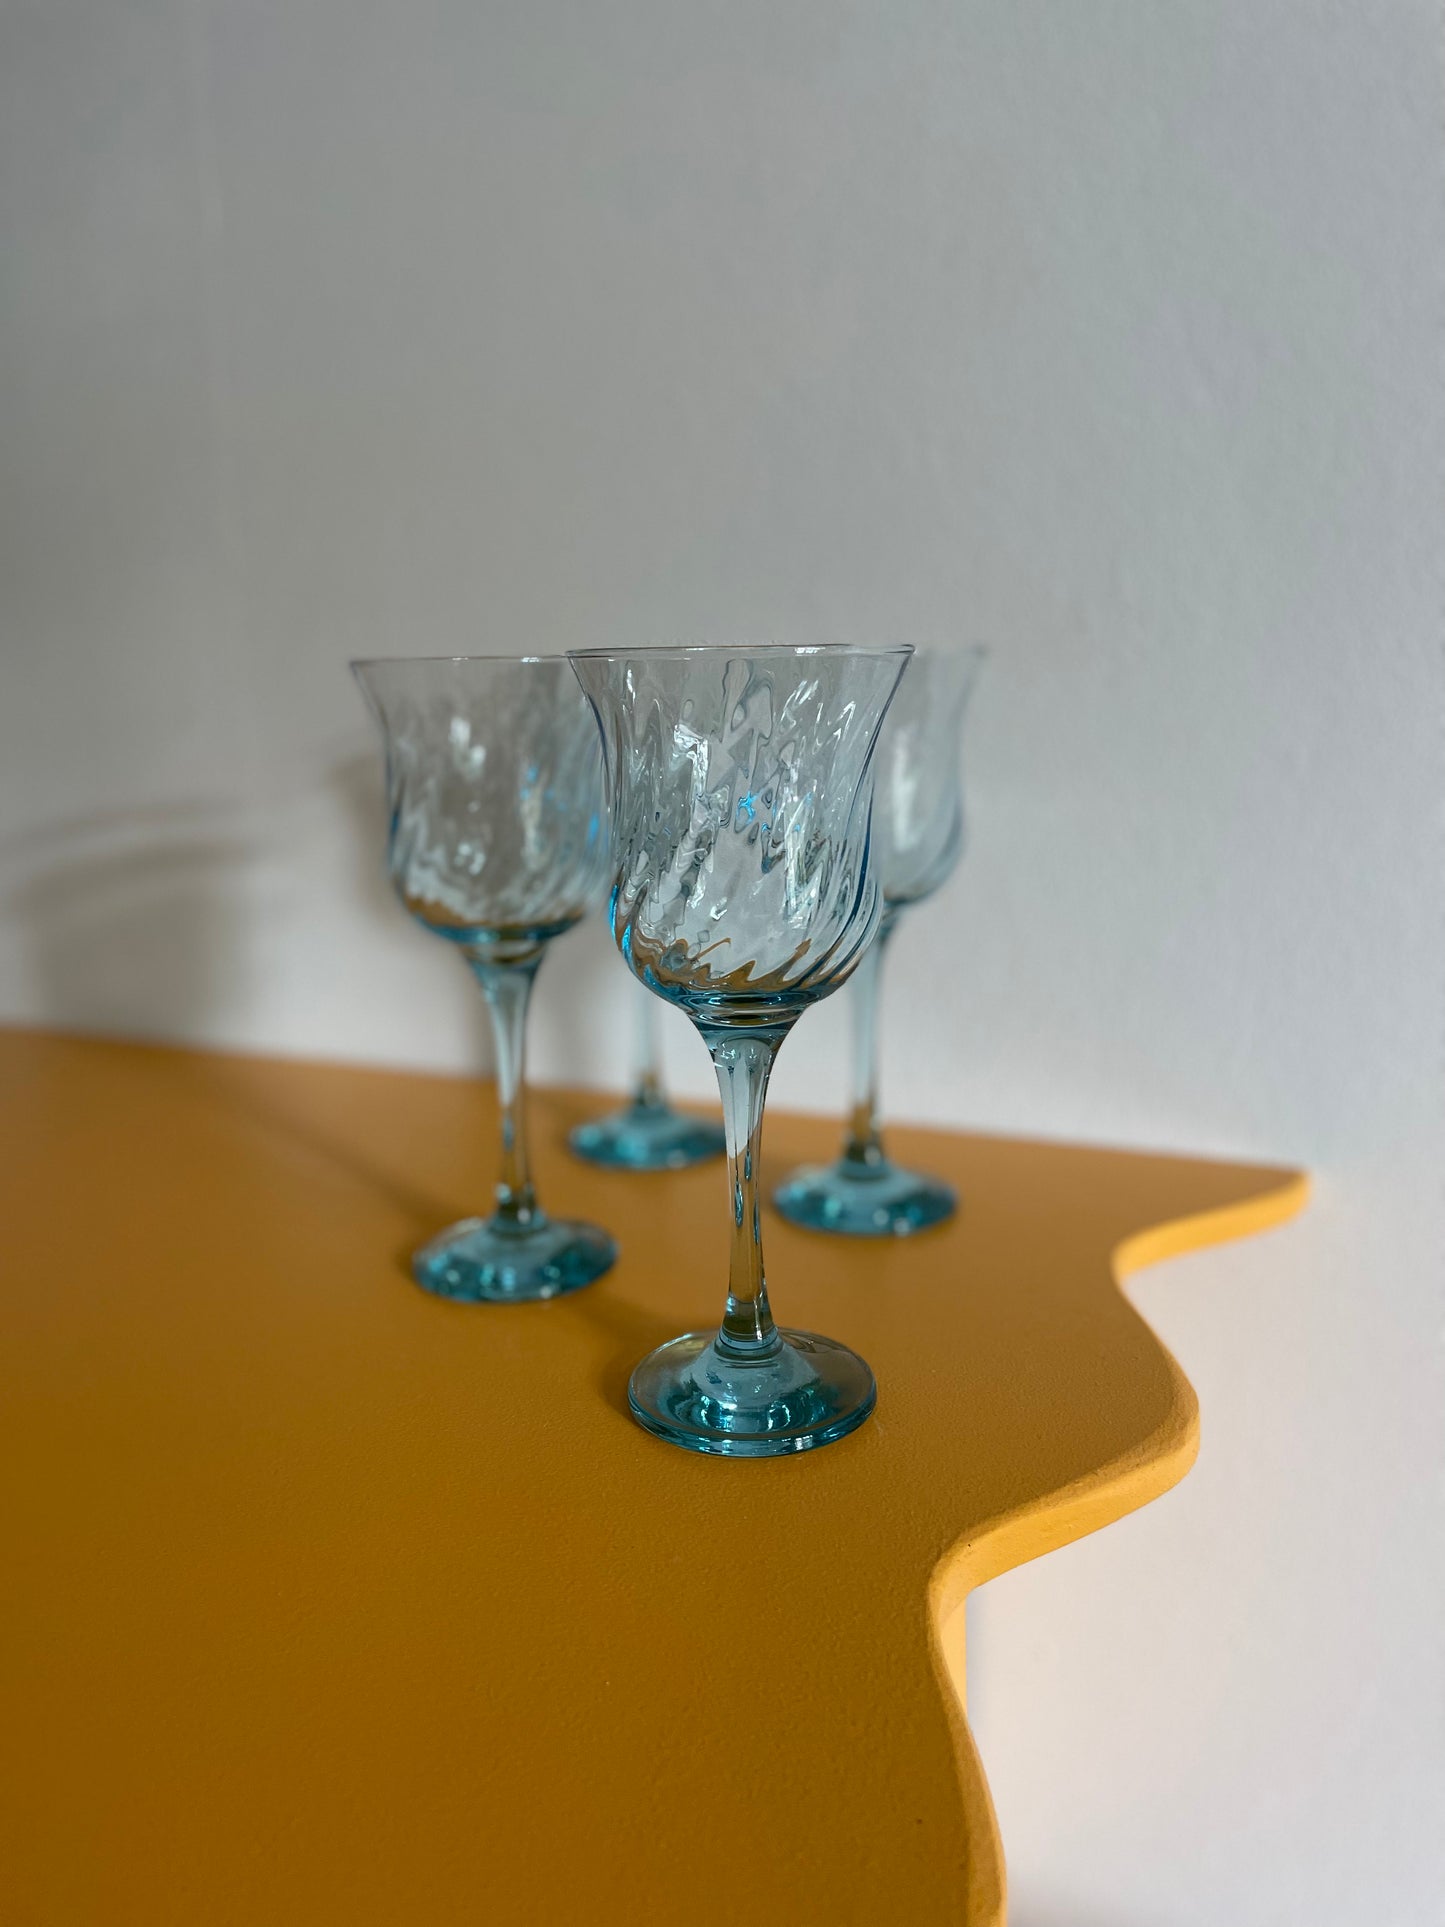 Beautiful blue wine glasses with swirl